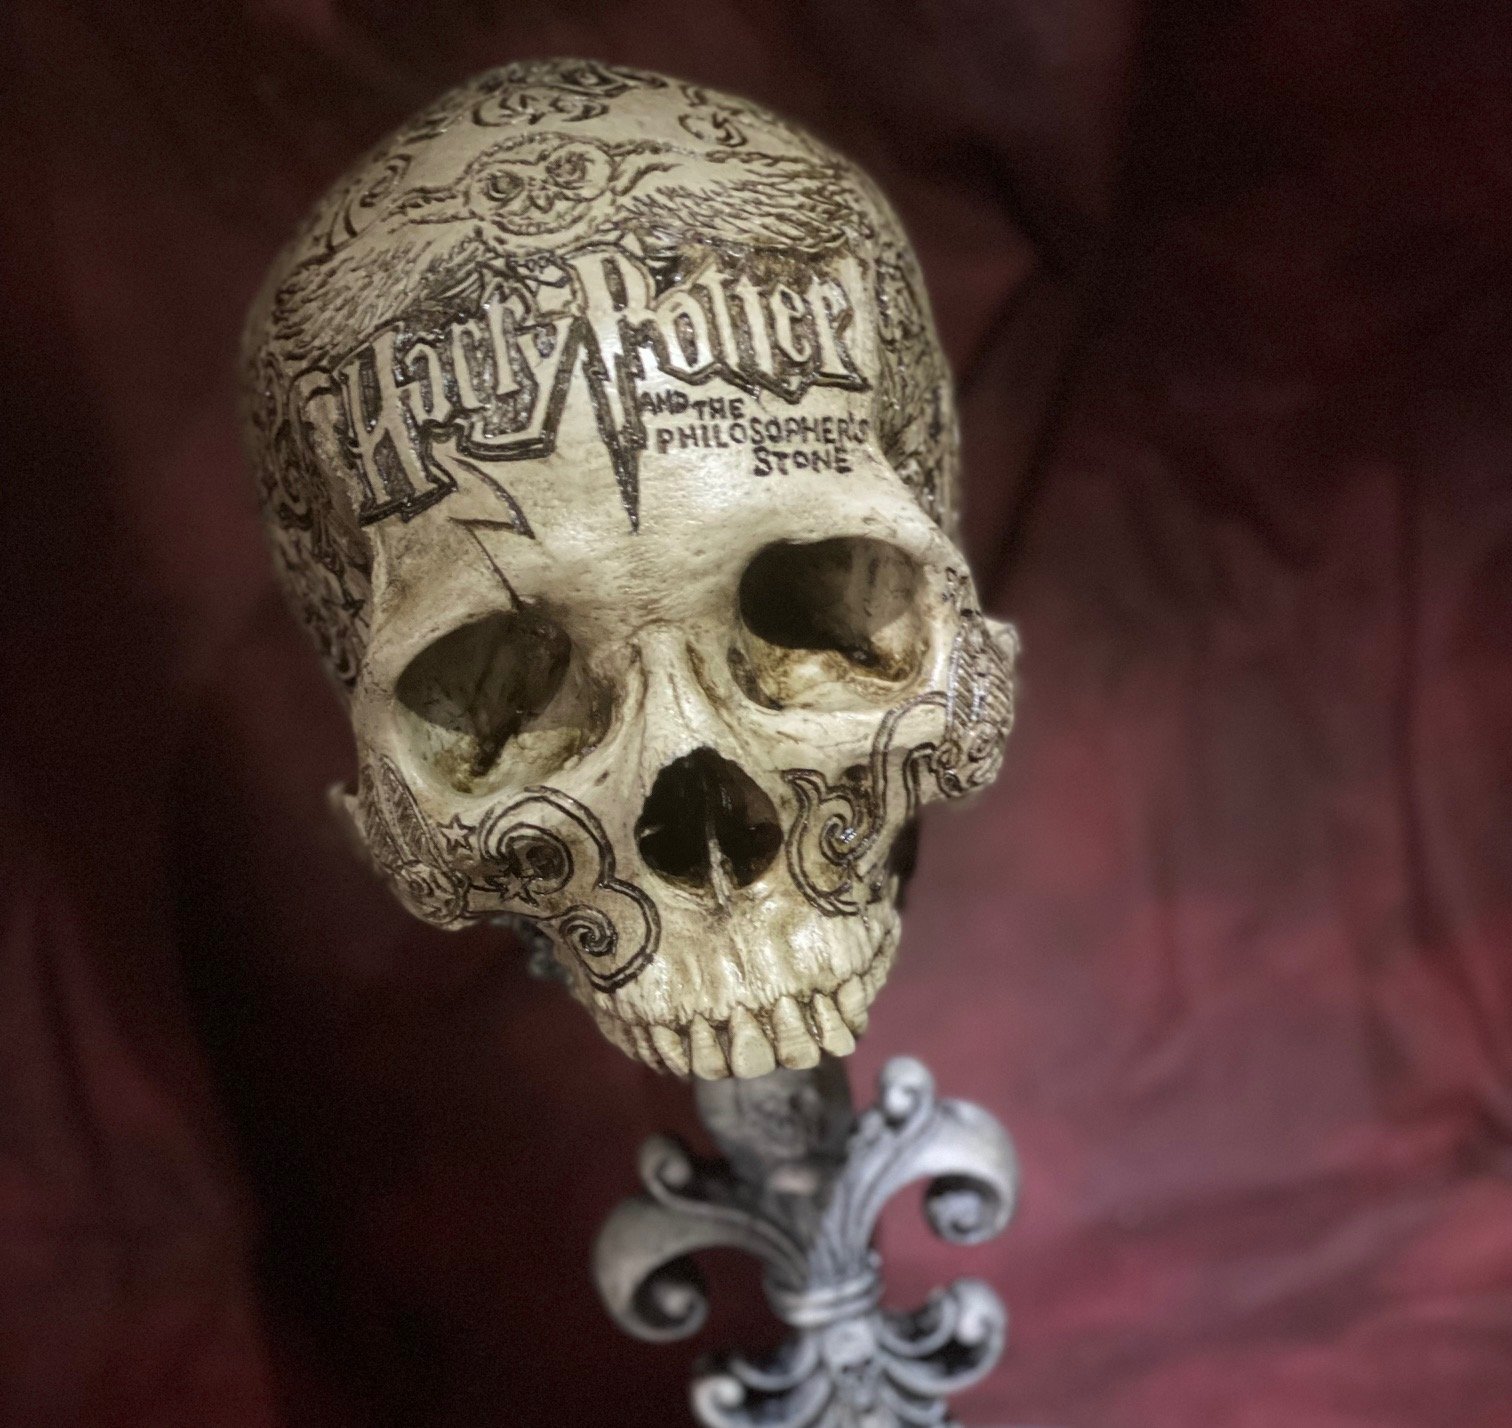 Rare Hand-Carved Resin Skulls Hidden At Orlando Harry Potter Theme Park